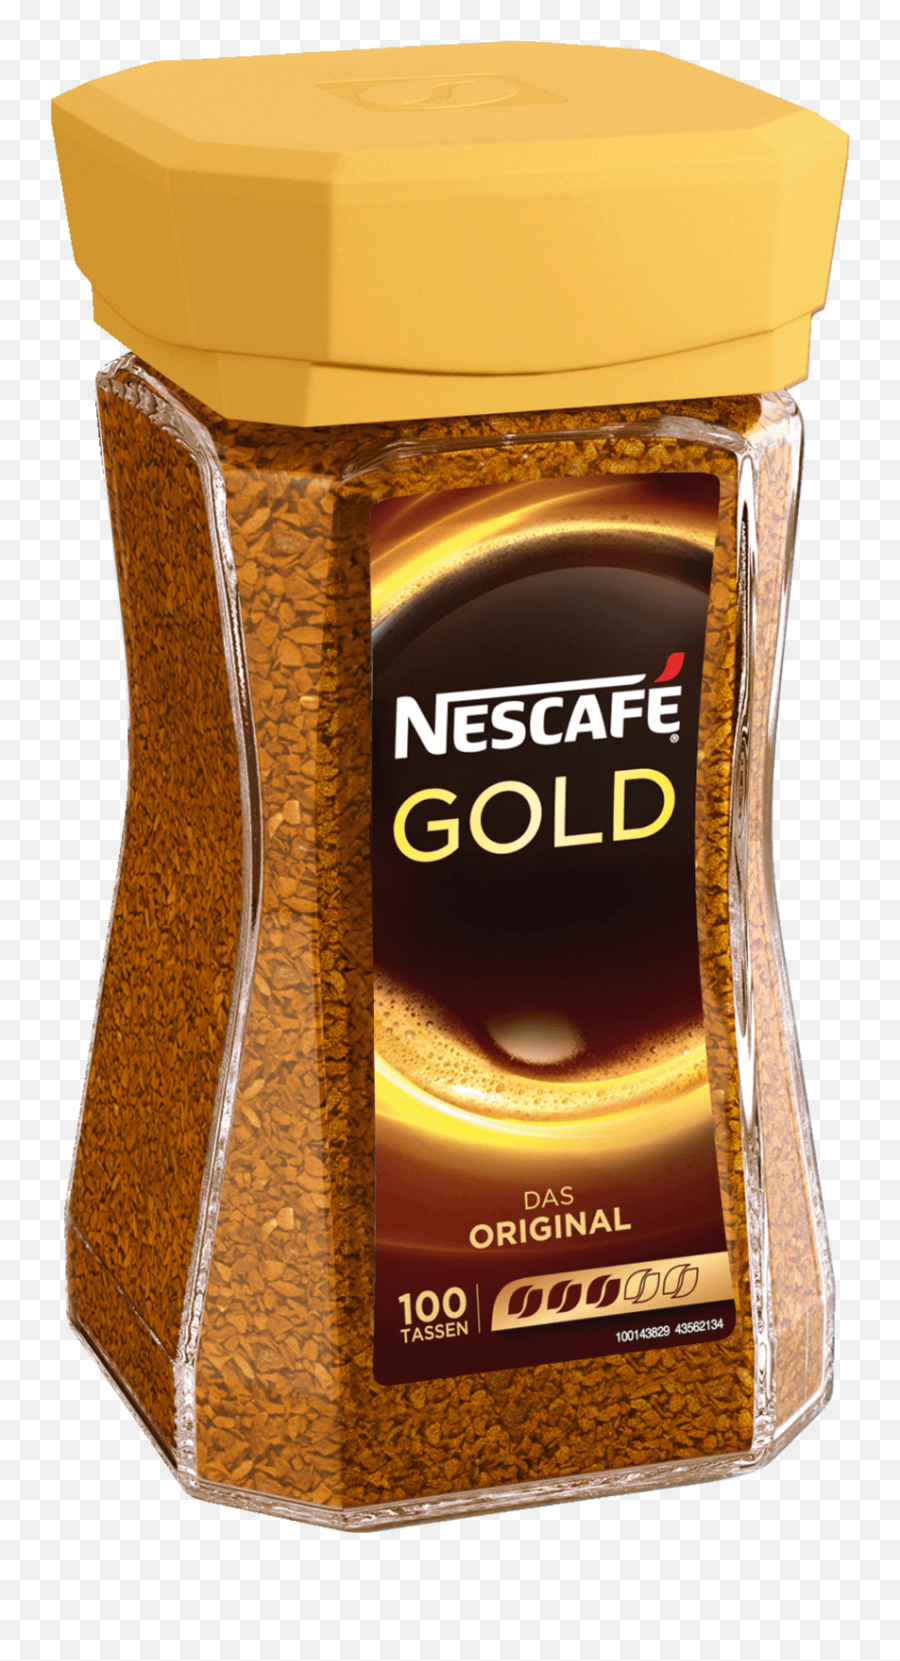 Coffee Jar Png Image - Purepng Free Transparent Cc0 Png Nescafe Gold Original 200g,Gold Transparent Background